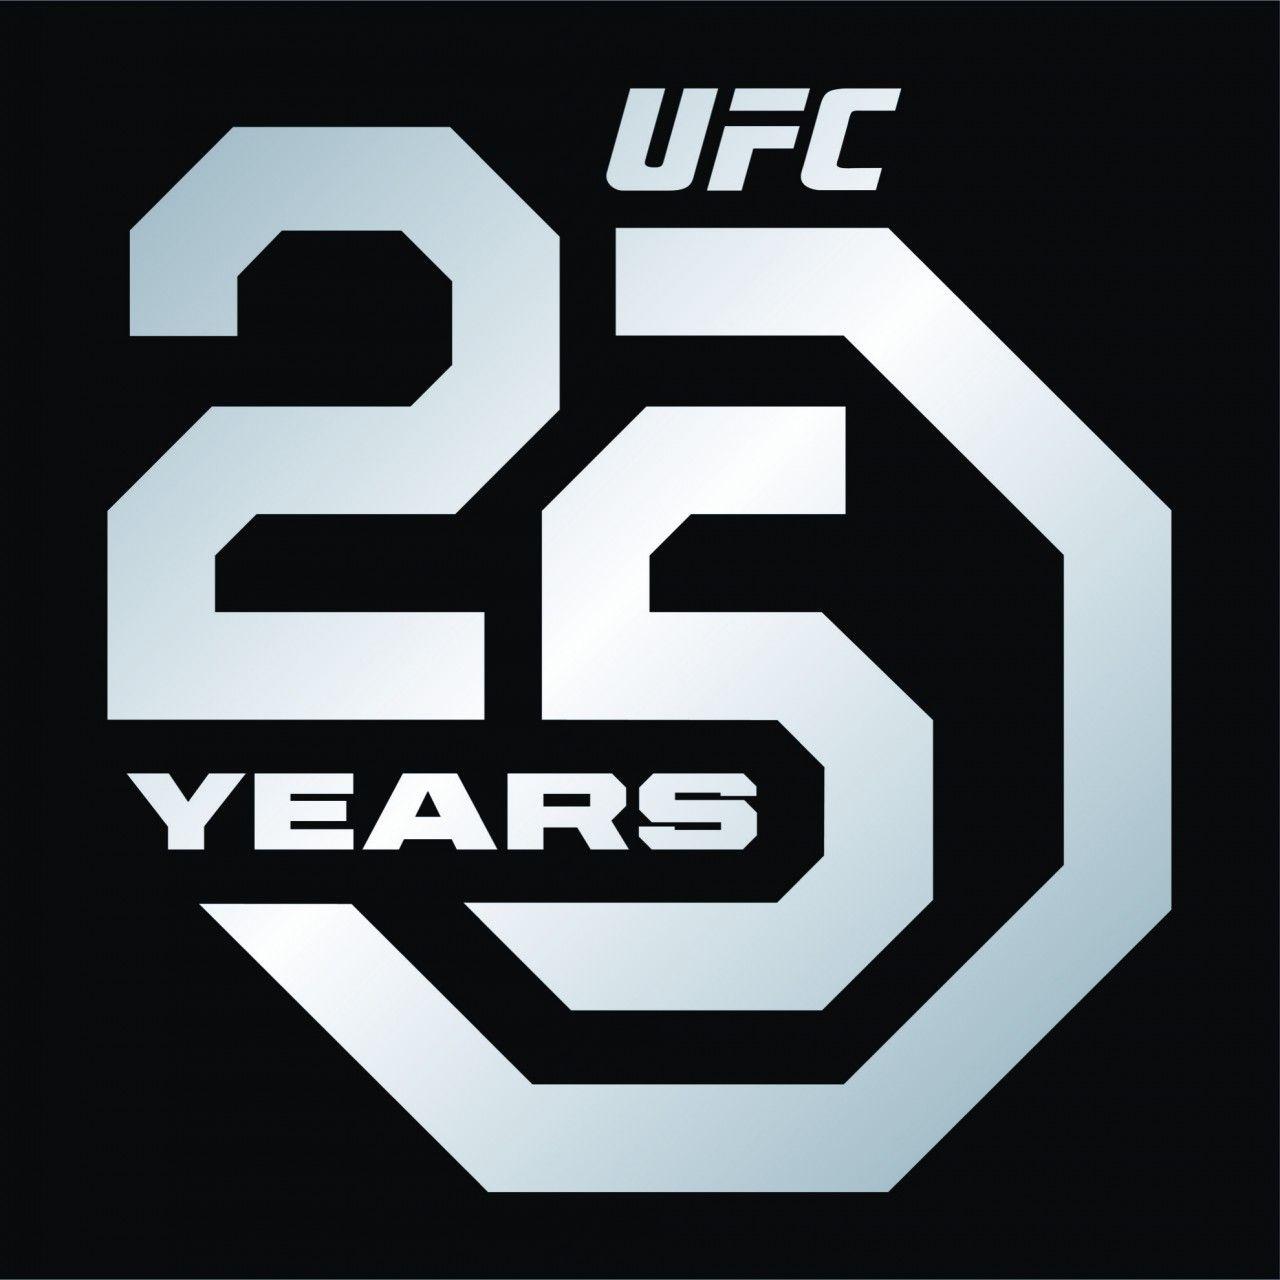 Droga5 Logo - UFC: 25th Anniversary logo